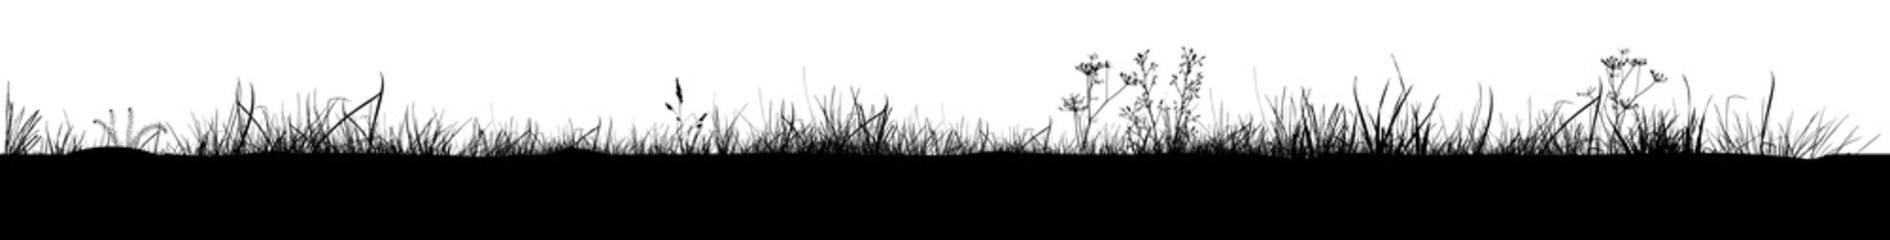 Grass black silhouettes. Vector illustration